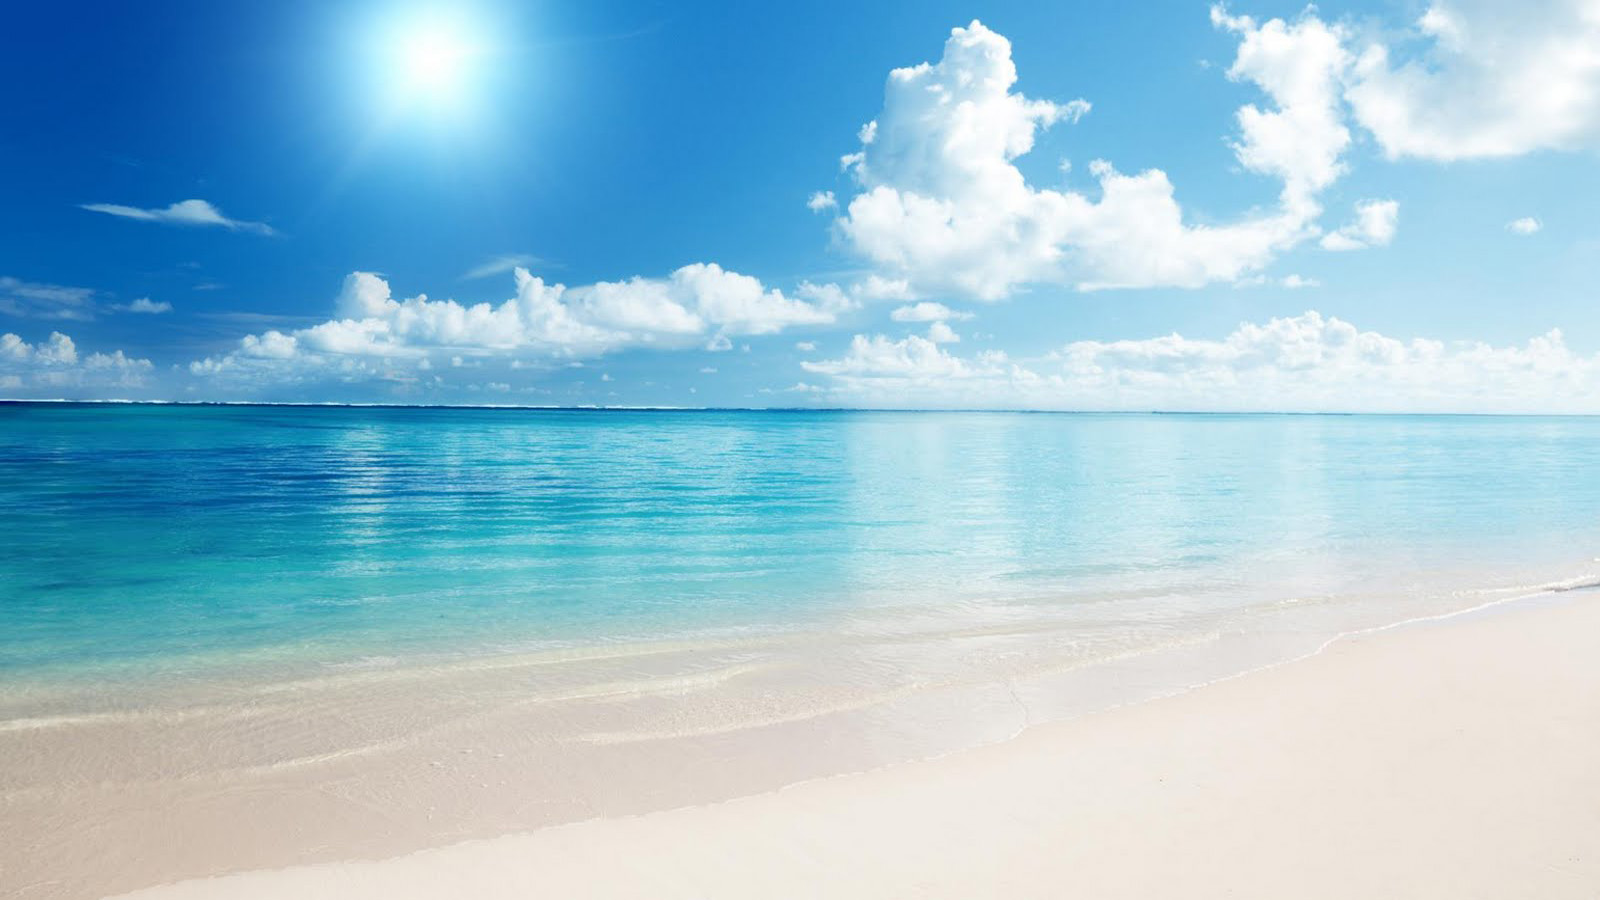 Sunny Beach Wallpaper photos of How to Choose Beautiful 1600x900